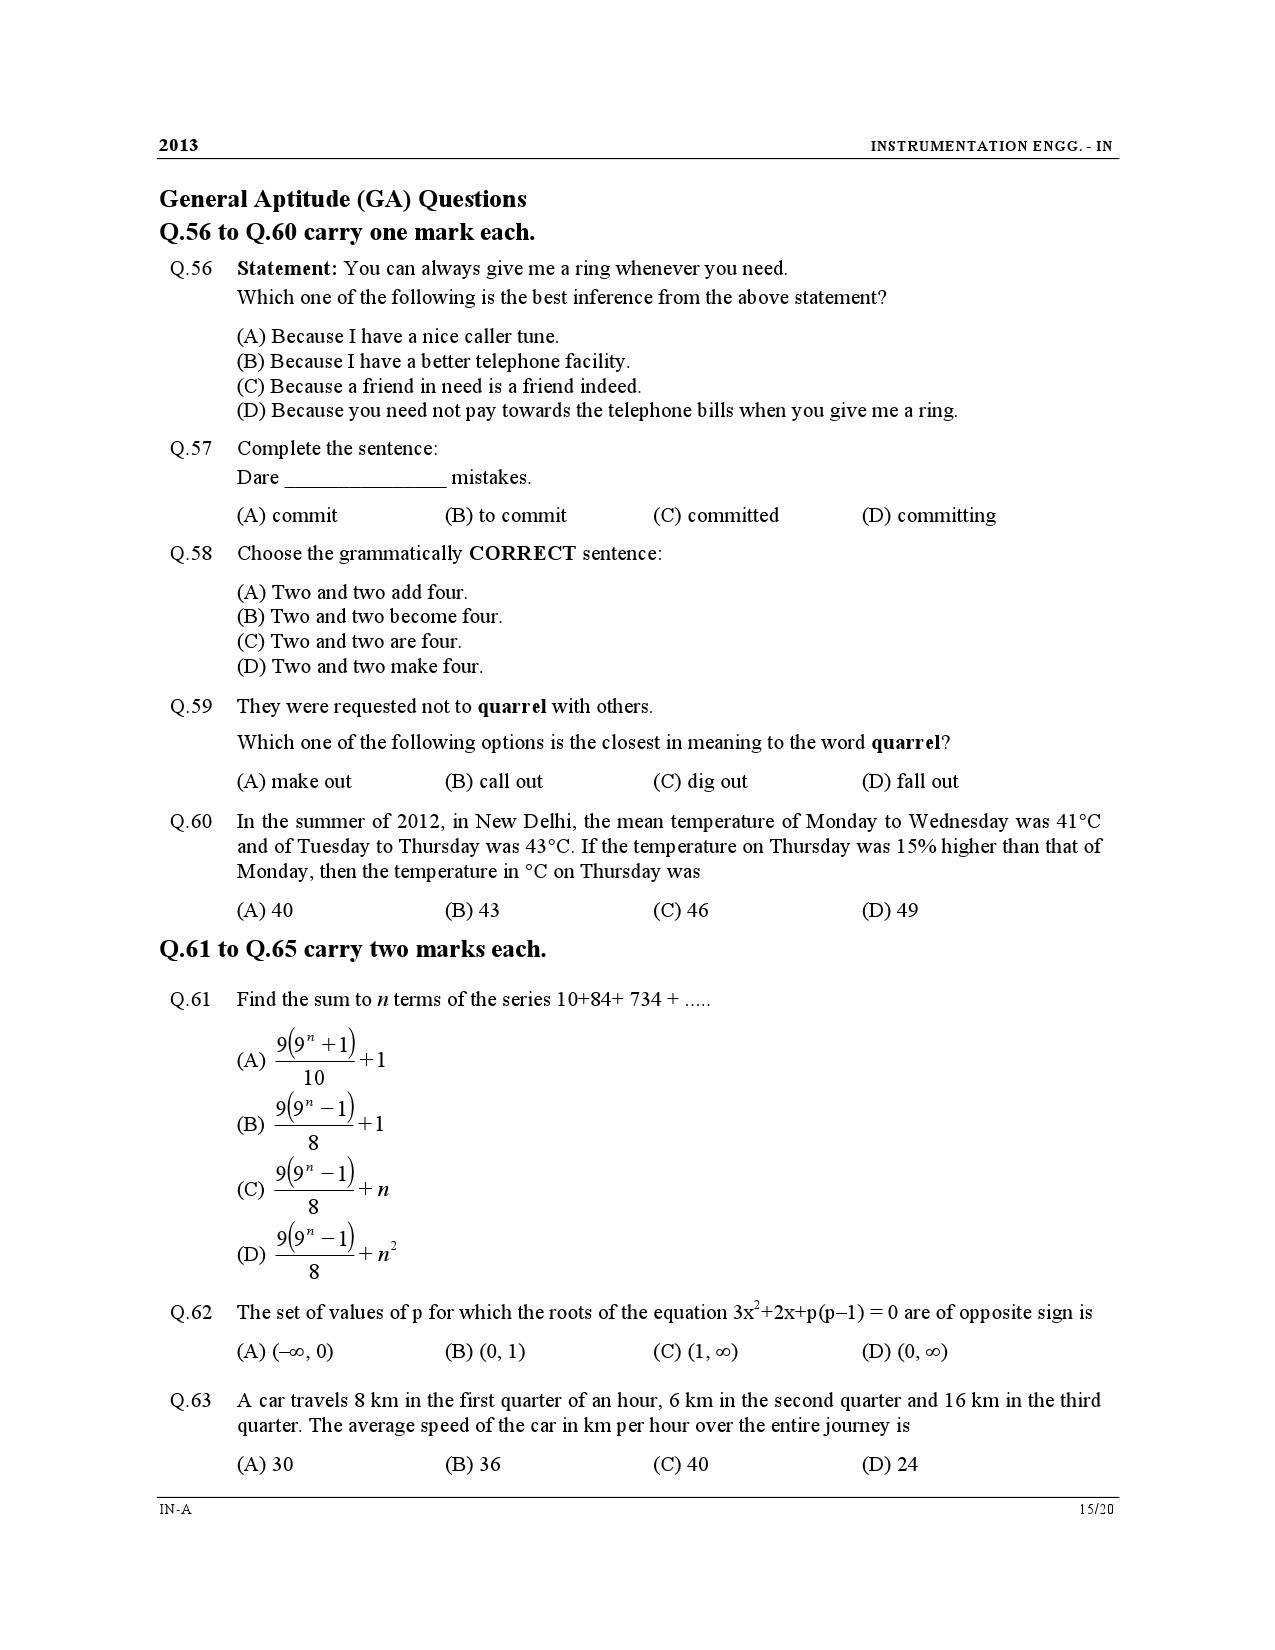 GATE Exam Question Paper 2013 Instrumentation Engineering 15